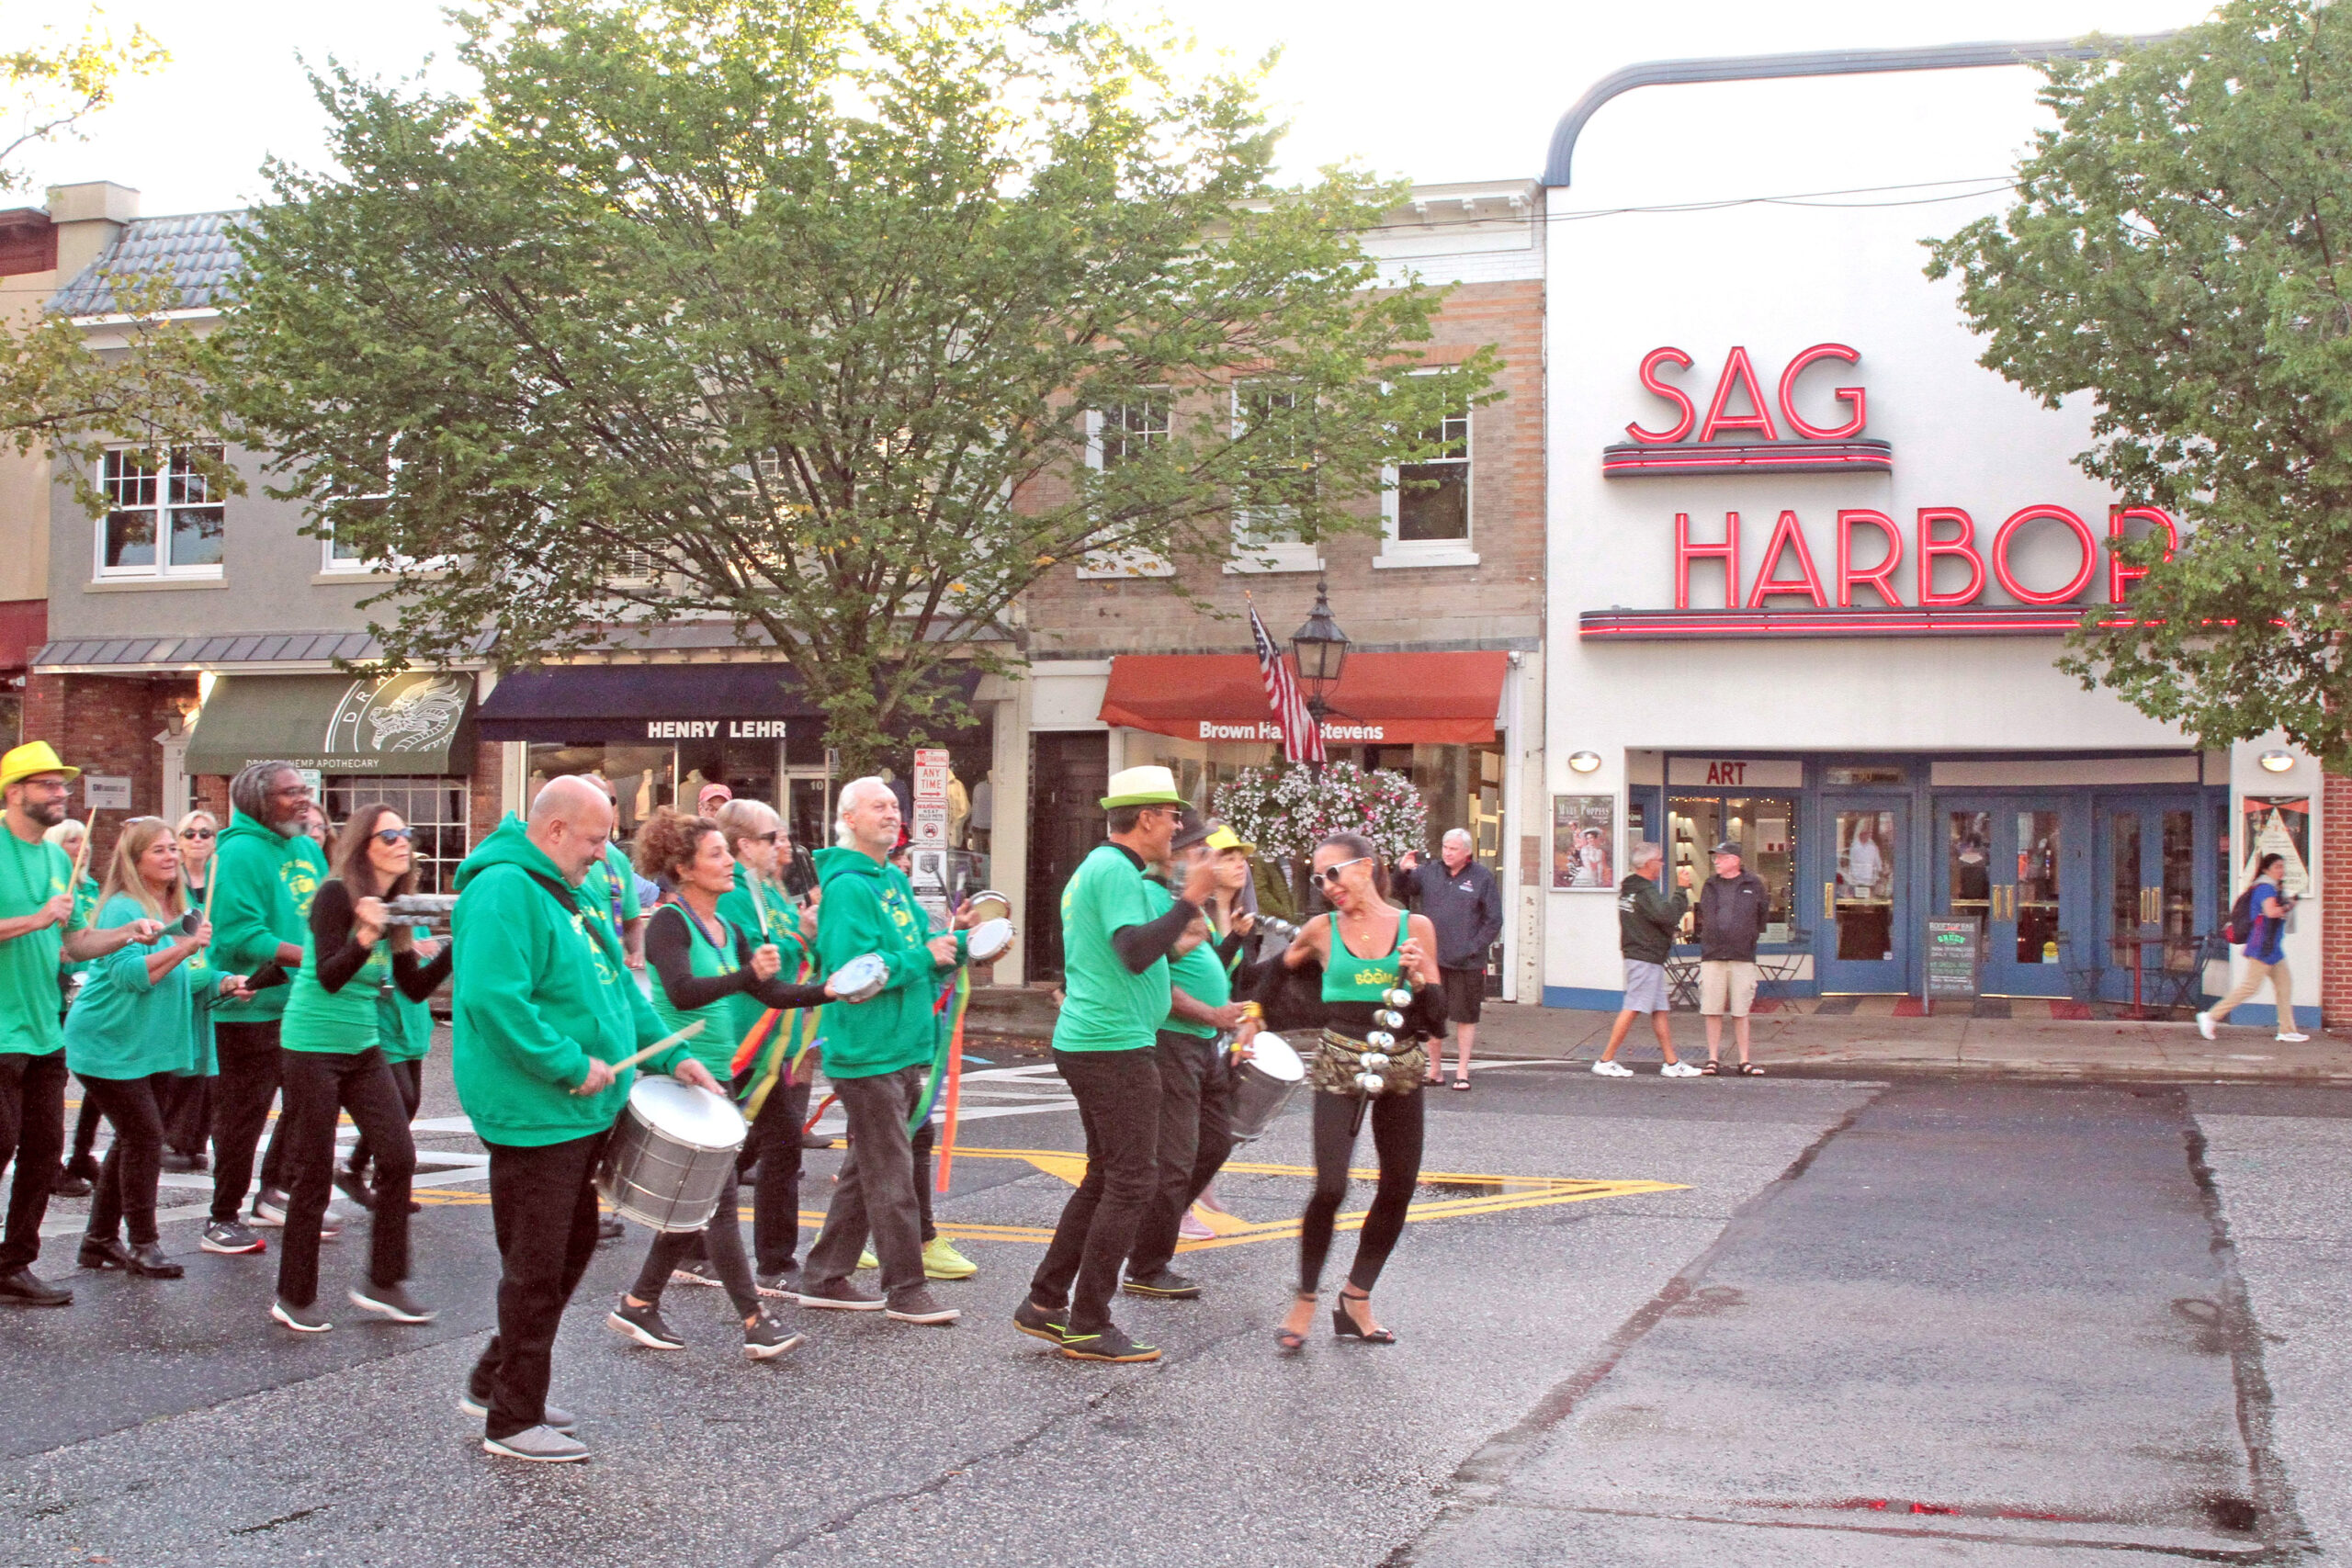 Escola de Samba Boom kicks-off the Sag Harbor American Music Festival on Main Street  on September 22.